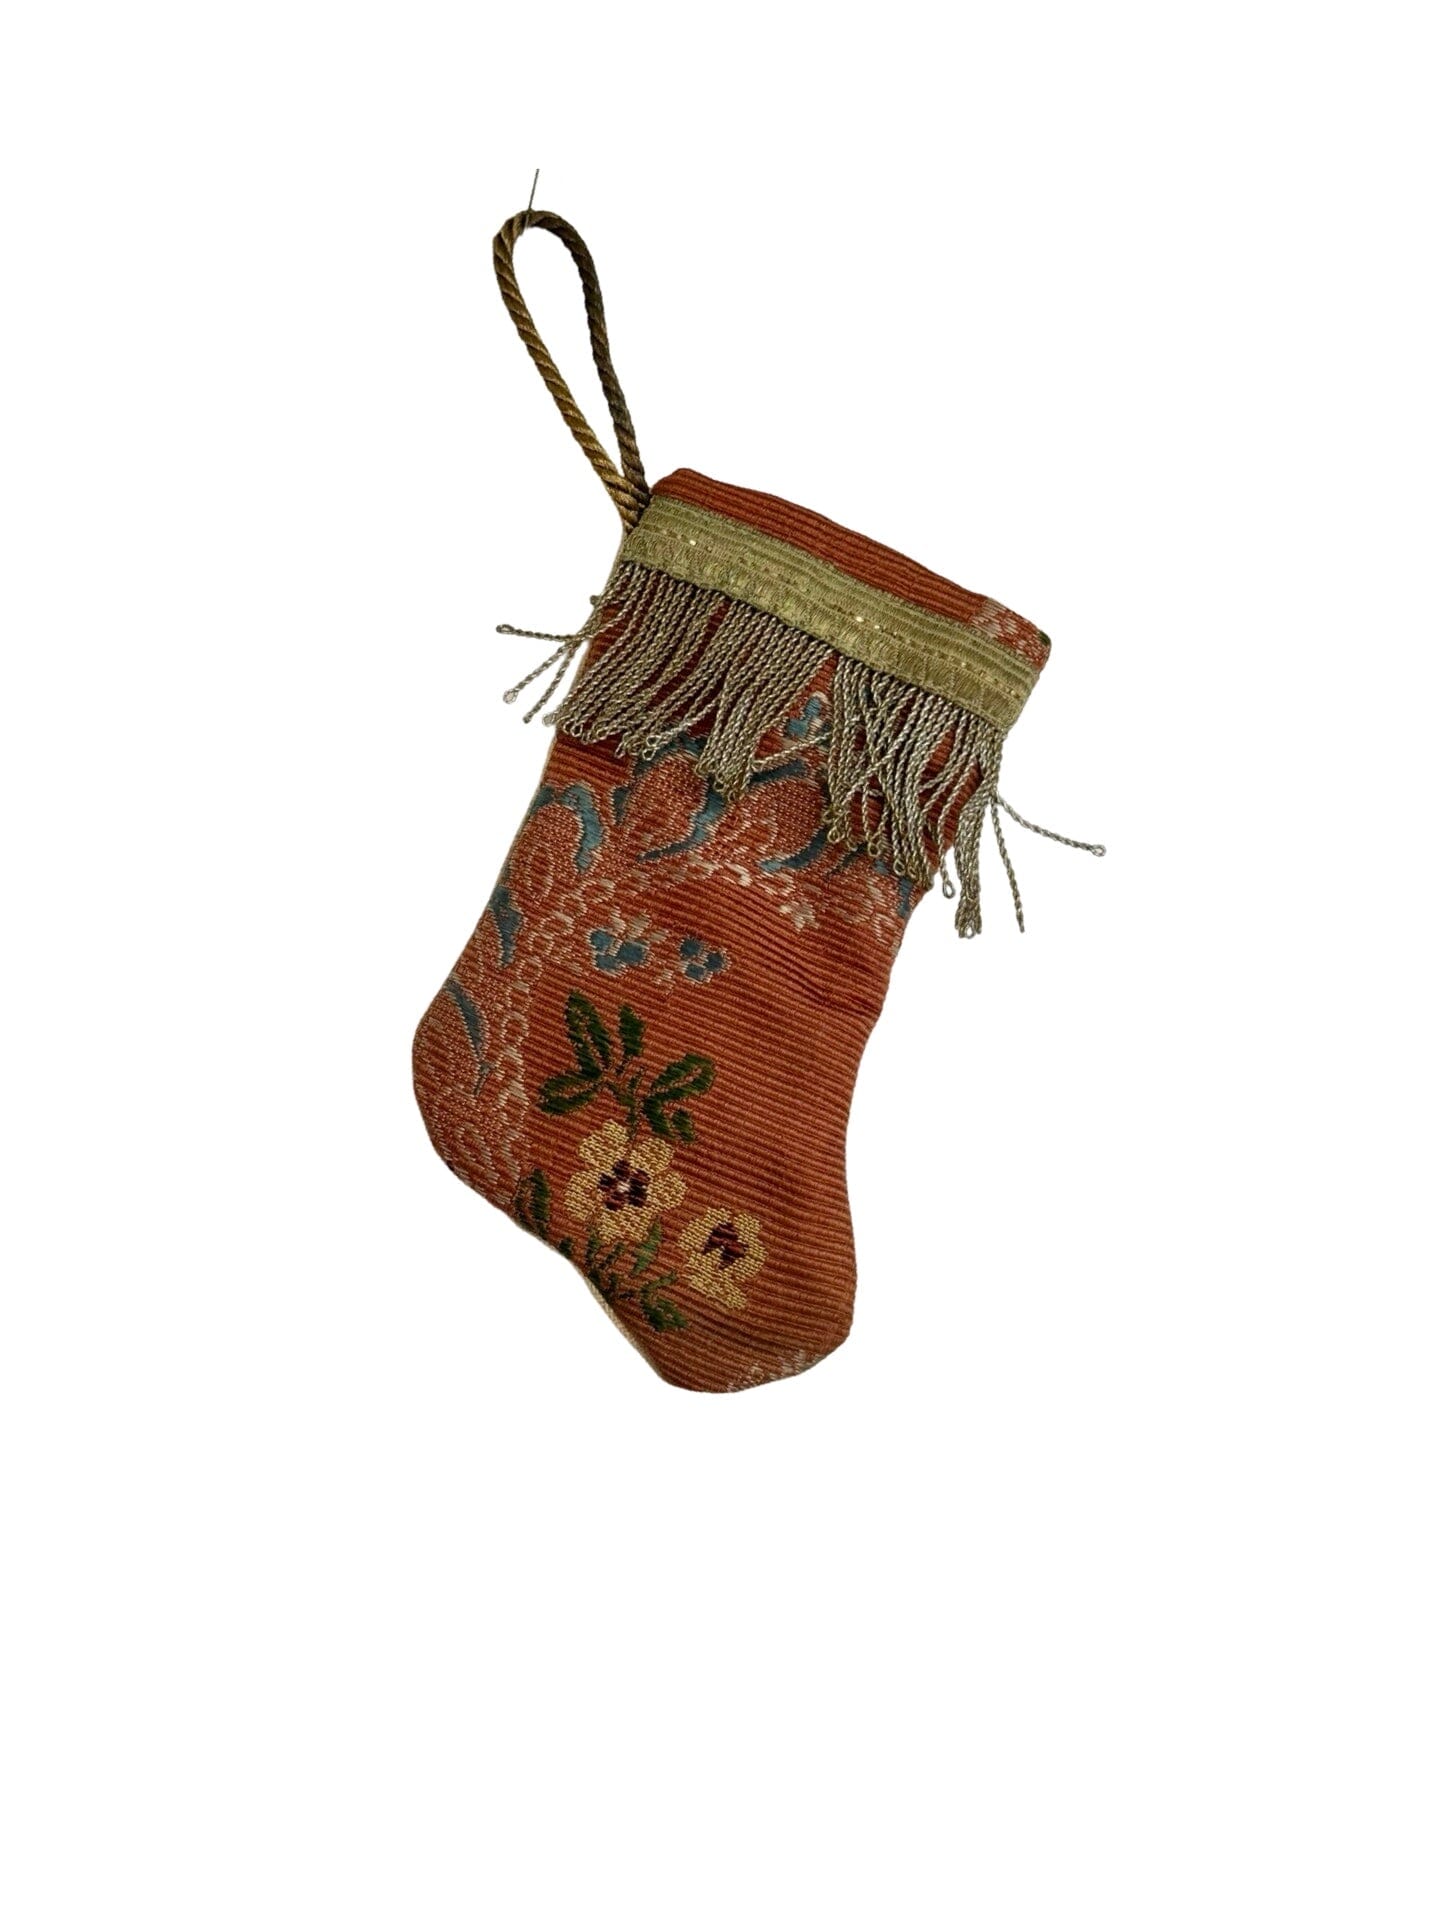 Handmade Mini Stocking Made From Vintage Fabric and Trims- Bronze Rose Floral Ornament B. Viz Design L 